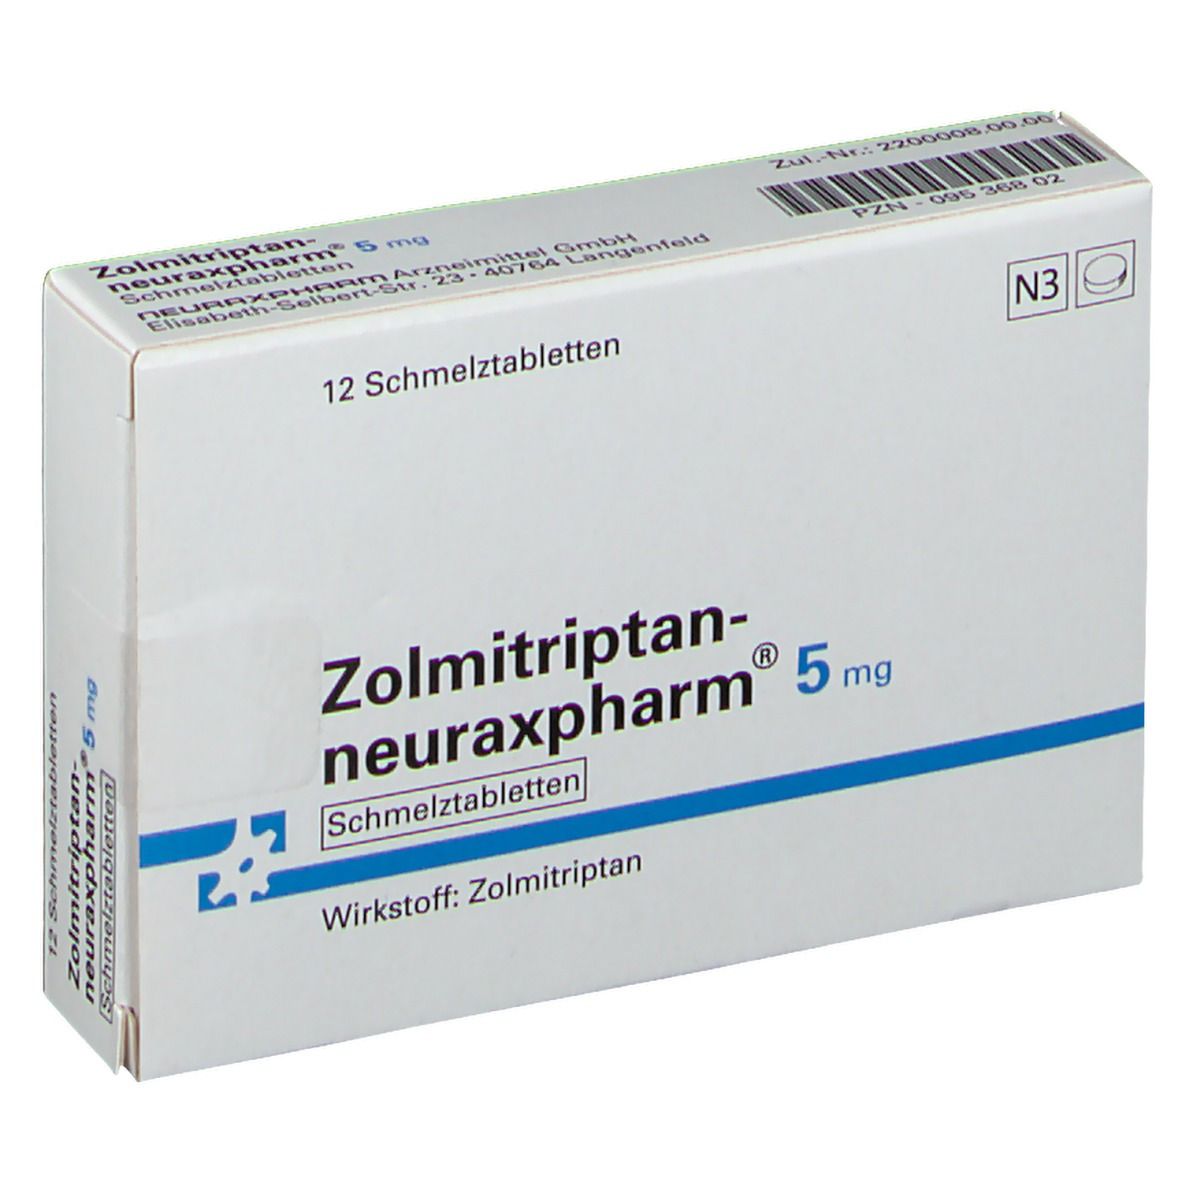 Zolmitriptan-neuraxpharm® 5 mg